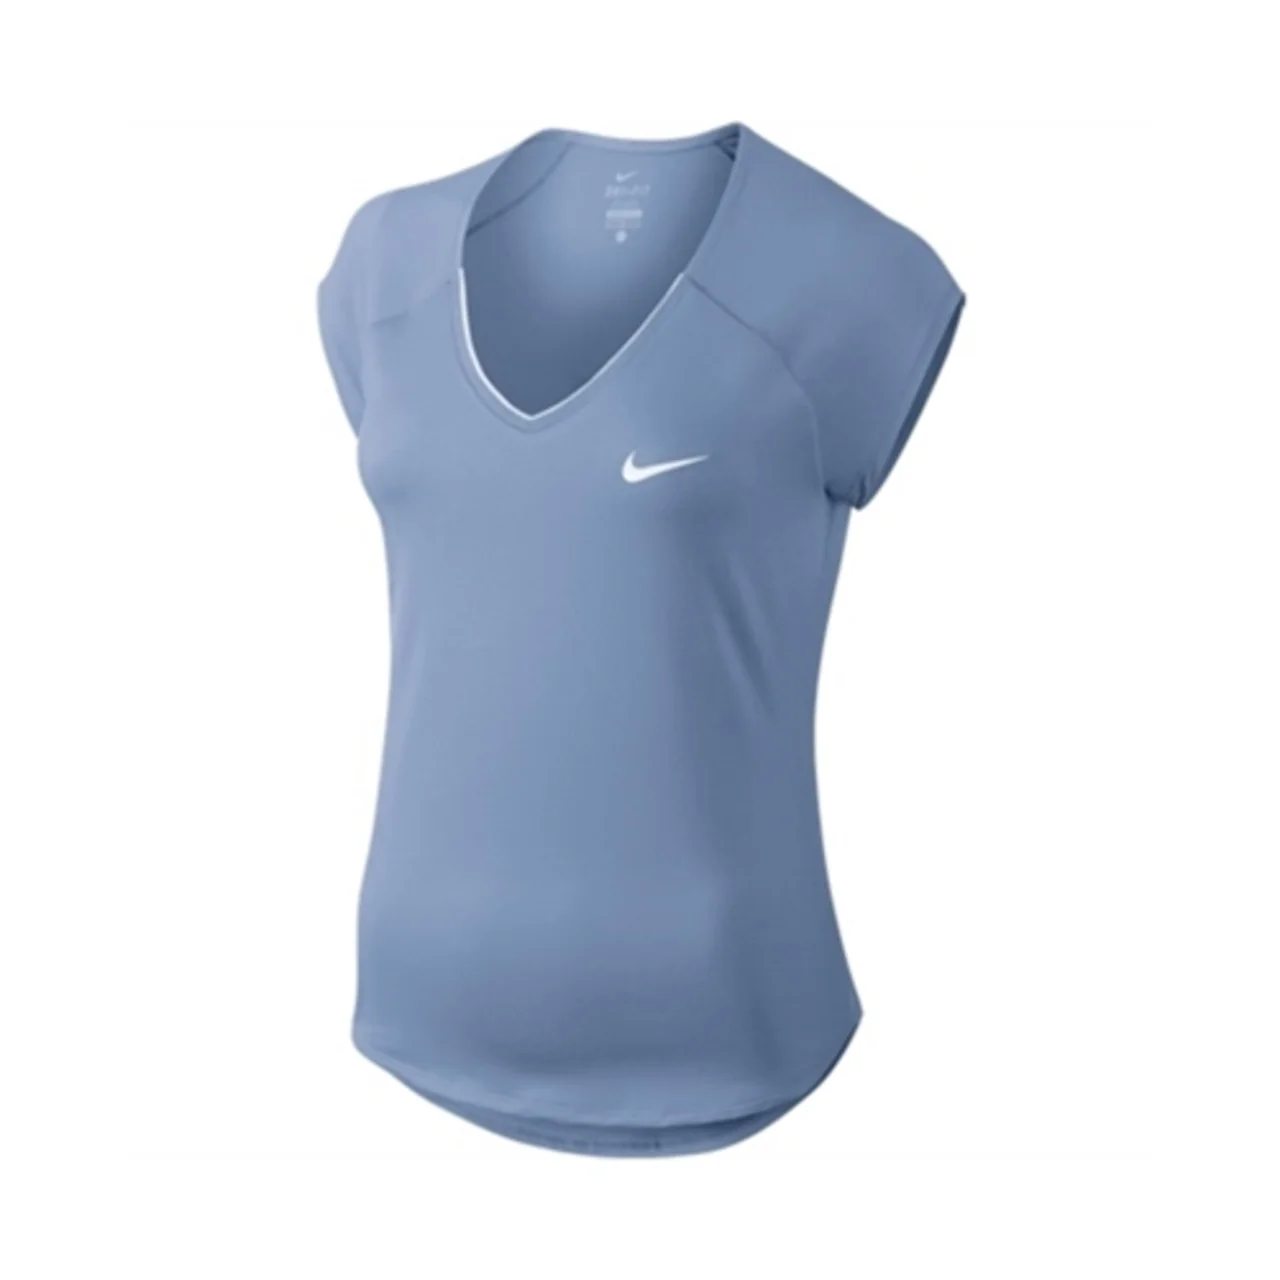 Nike Pure Top Light Blue Size XS